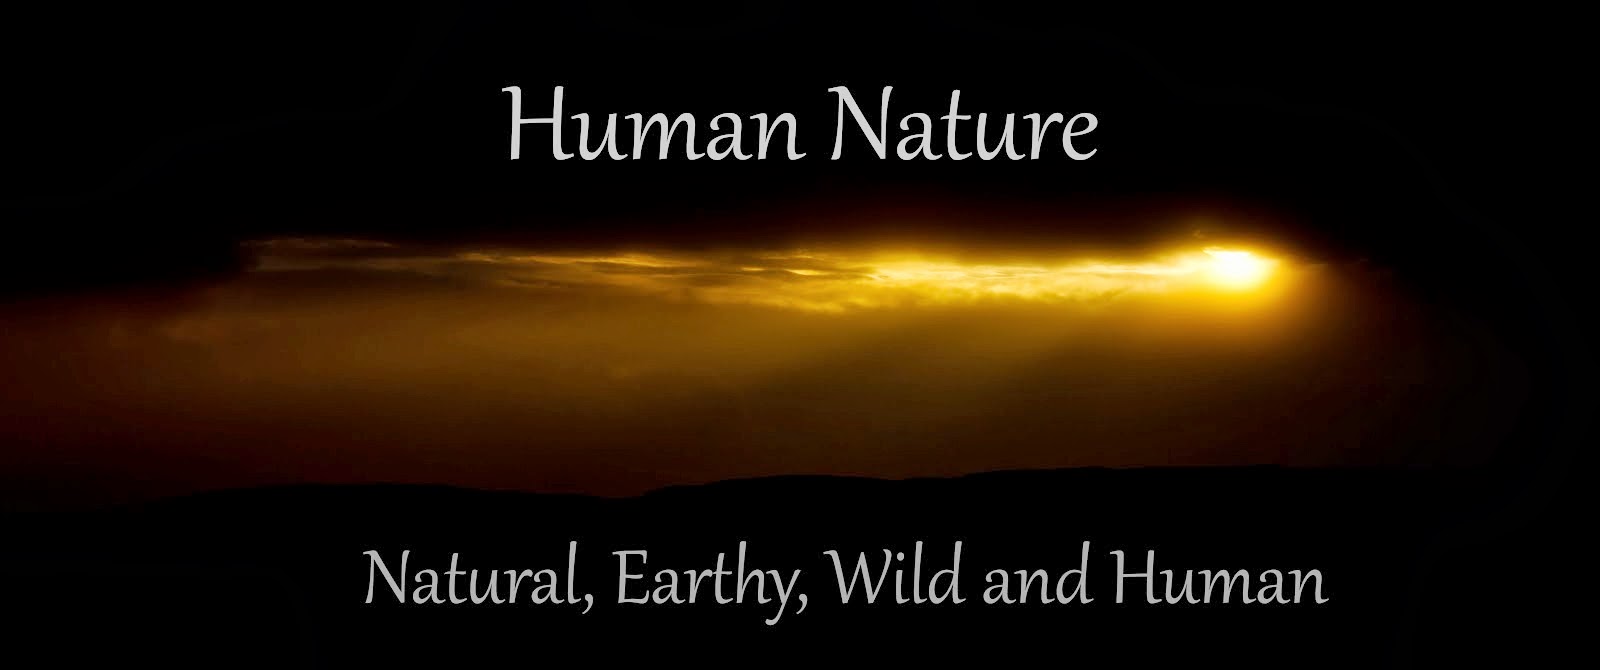 Human Nature - Kris Worsley Wildlife Photography